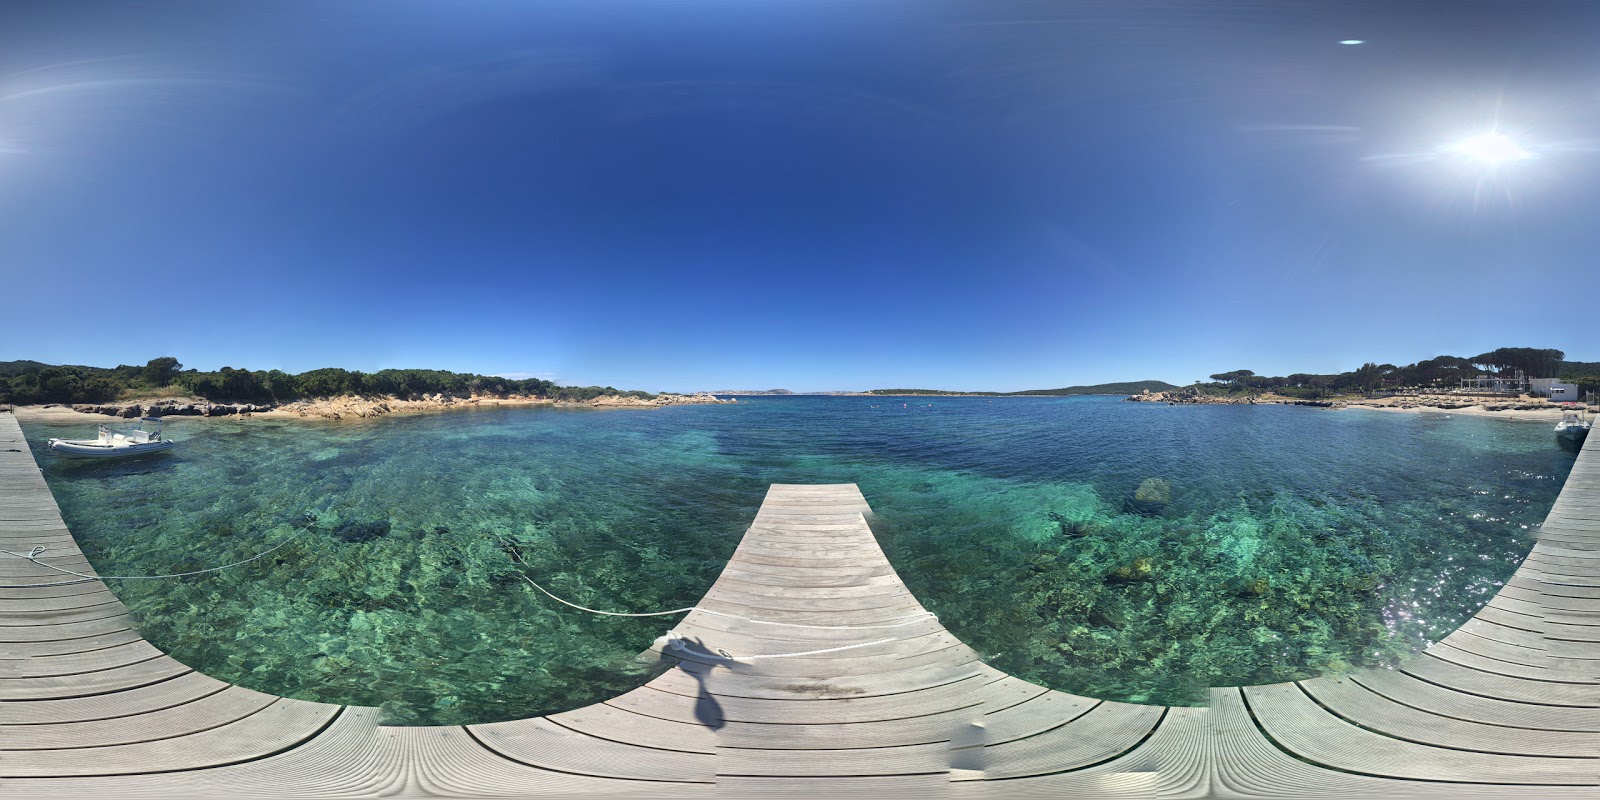 Spiaggia Conca Verde的照片 带有碧绿色纯水表面